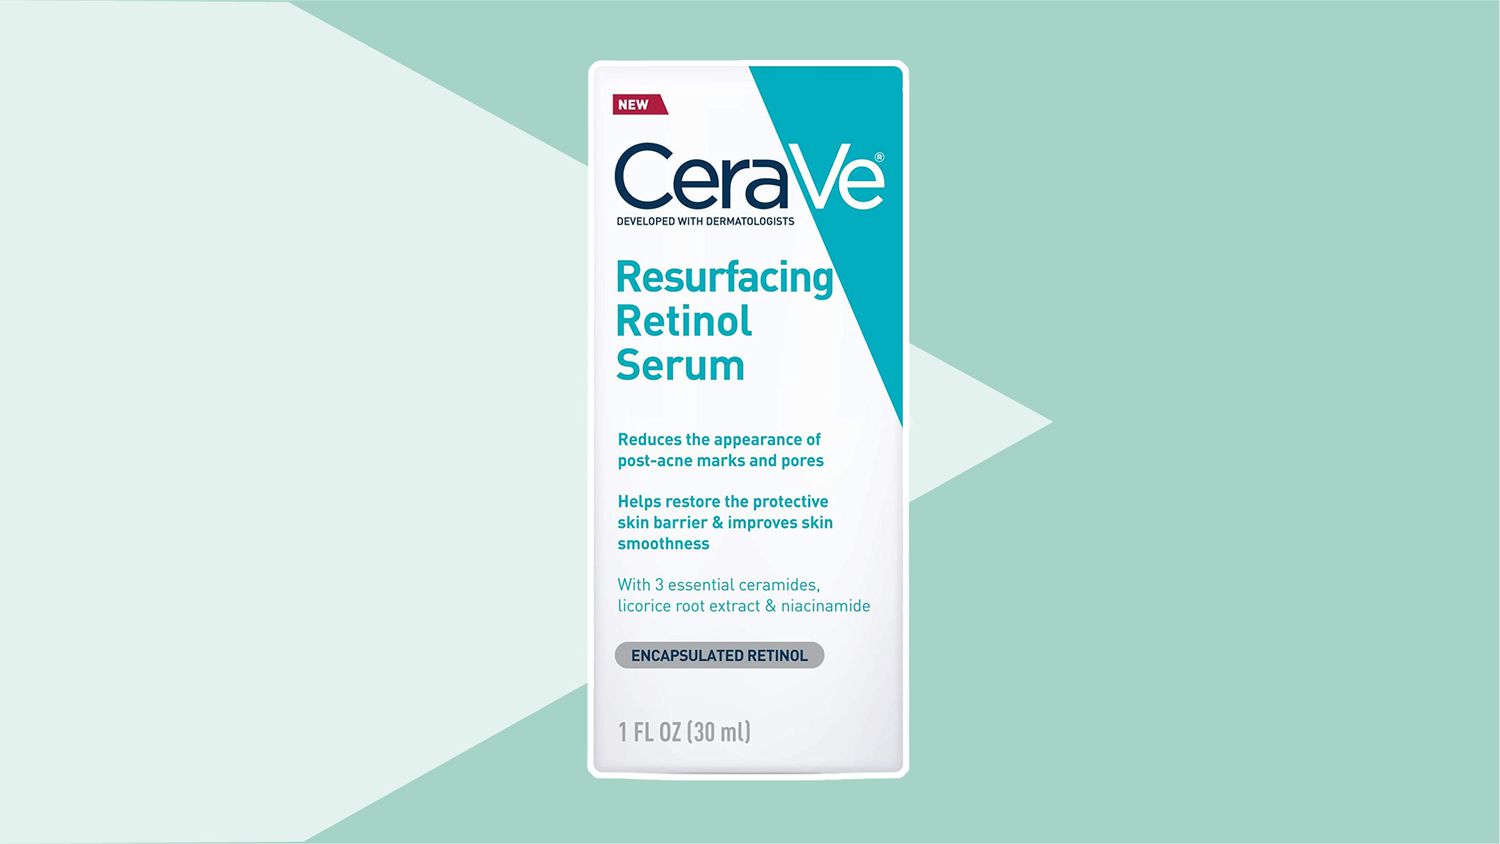 Cerave resurfacing retinol serum